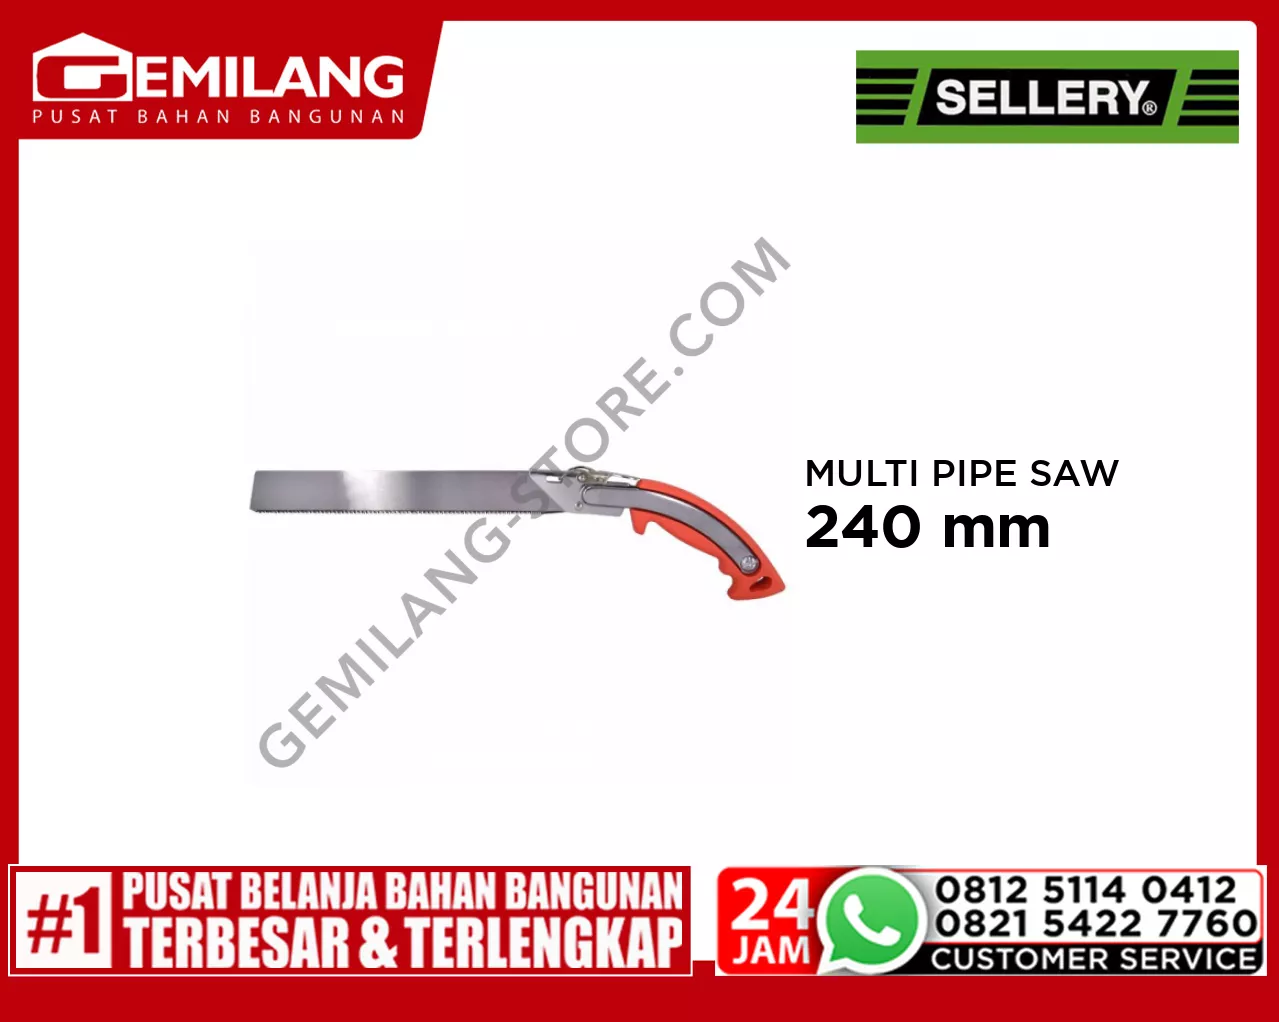 SELLERY MULTI PIPE SAW 240mm (81-840)